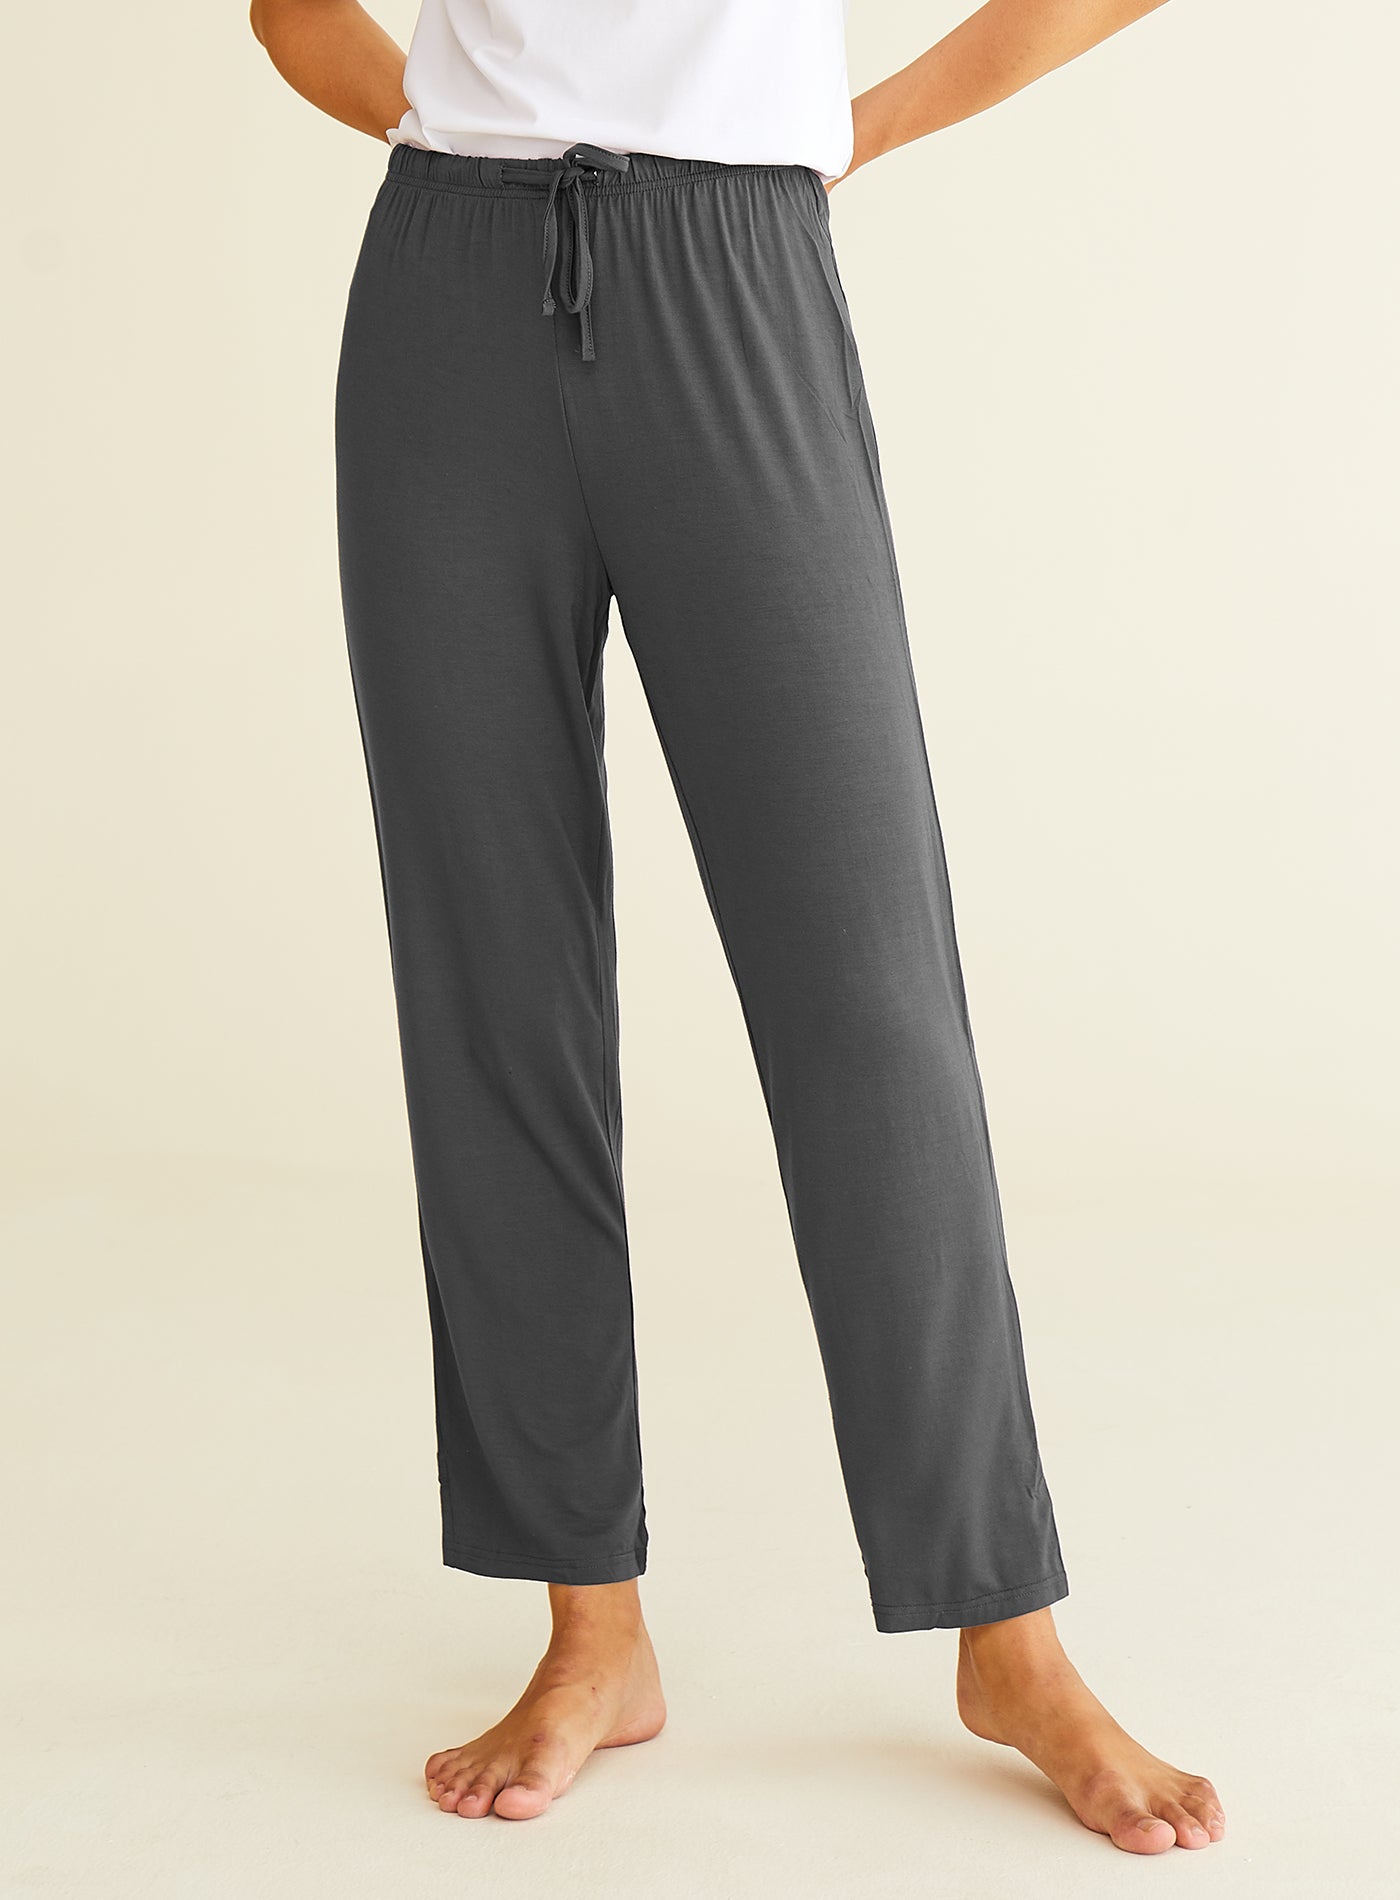 Womens Wide Leg Pajama Bottoms Drawstring Plus Size Lounge Pants Long  Sleepwear Pyjamas Pjs Pants with Pockets gray 3XL 